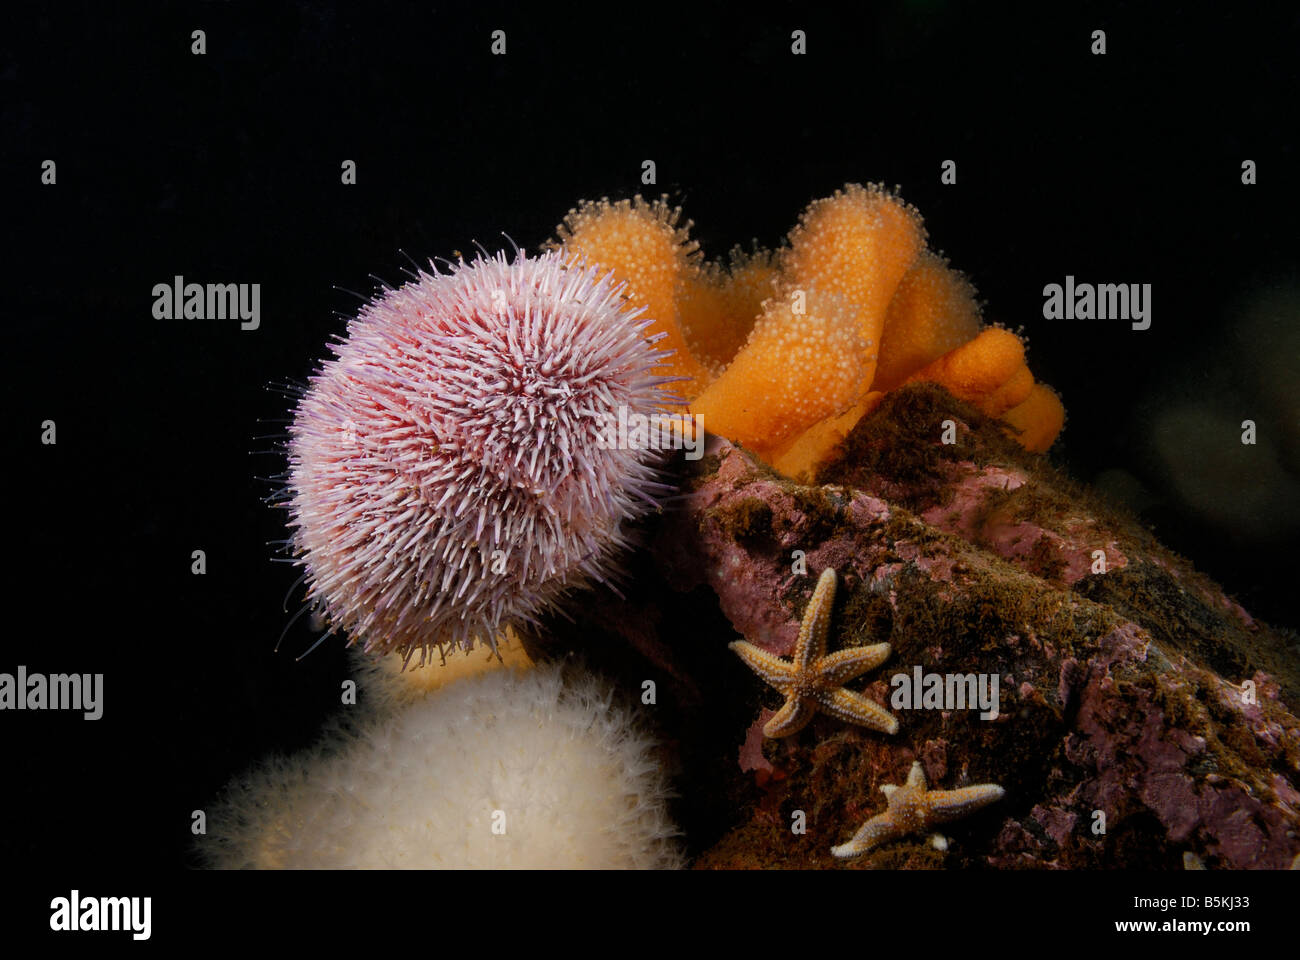 Sea urchin (Echinus esculentus), star fish and soft corals (alcyonium digitatum), St Abbs Head, UK. Stock Photo